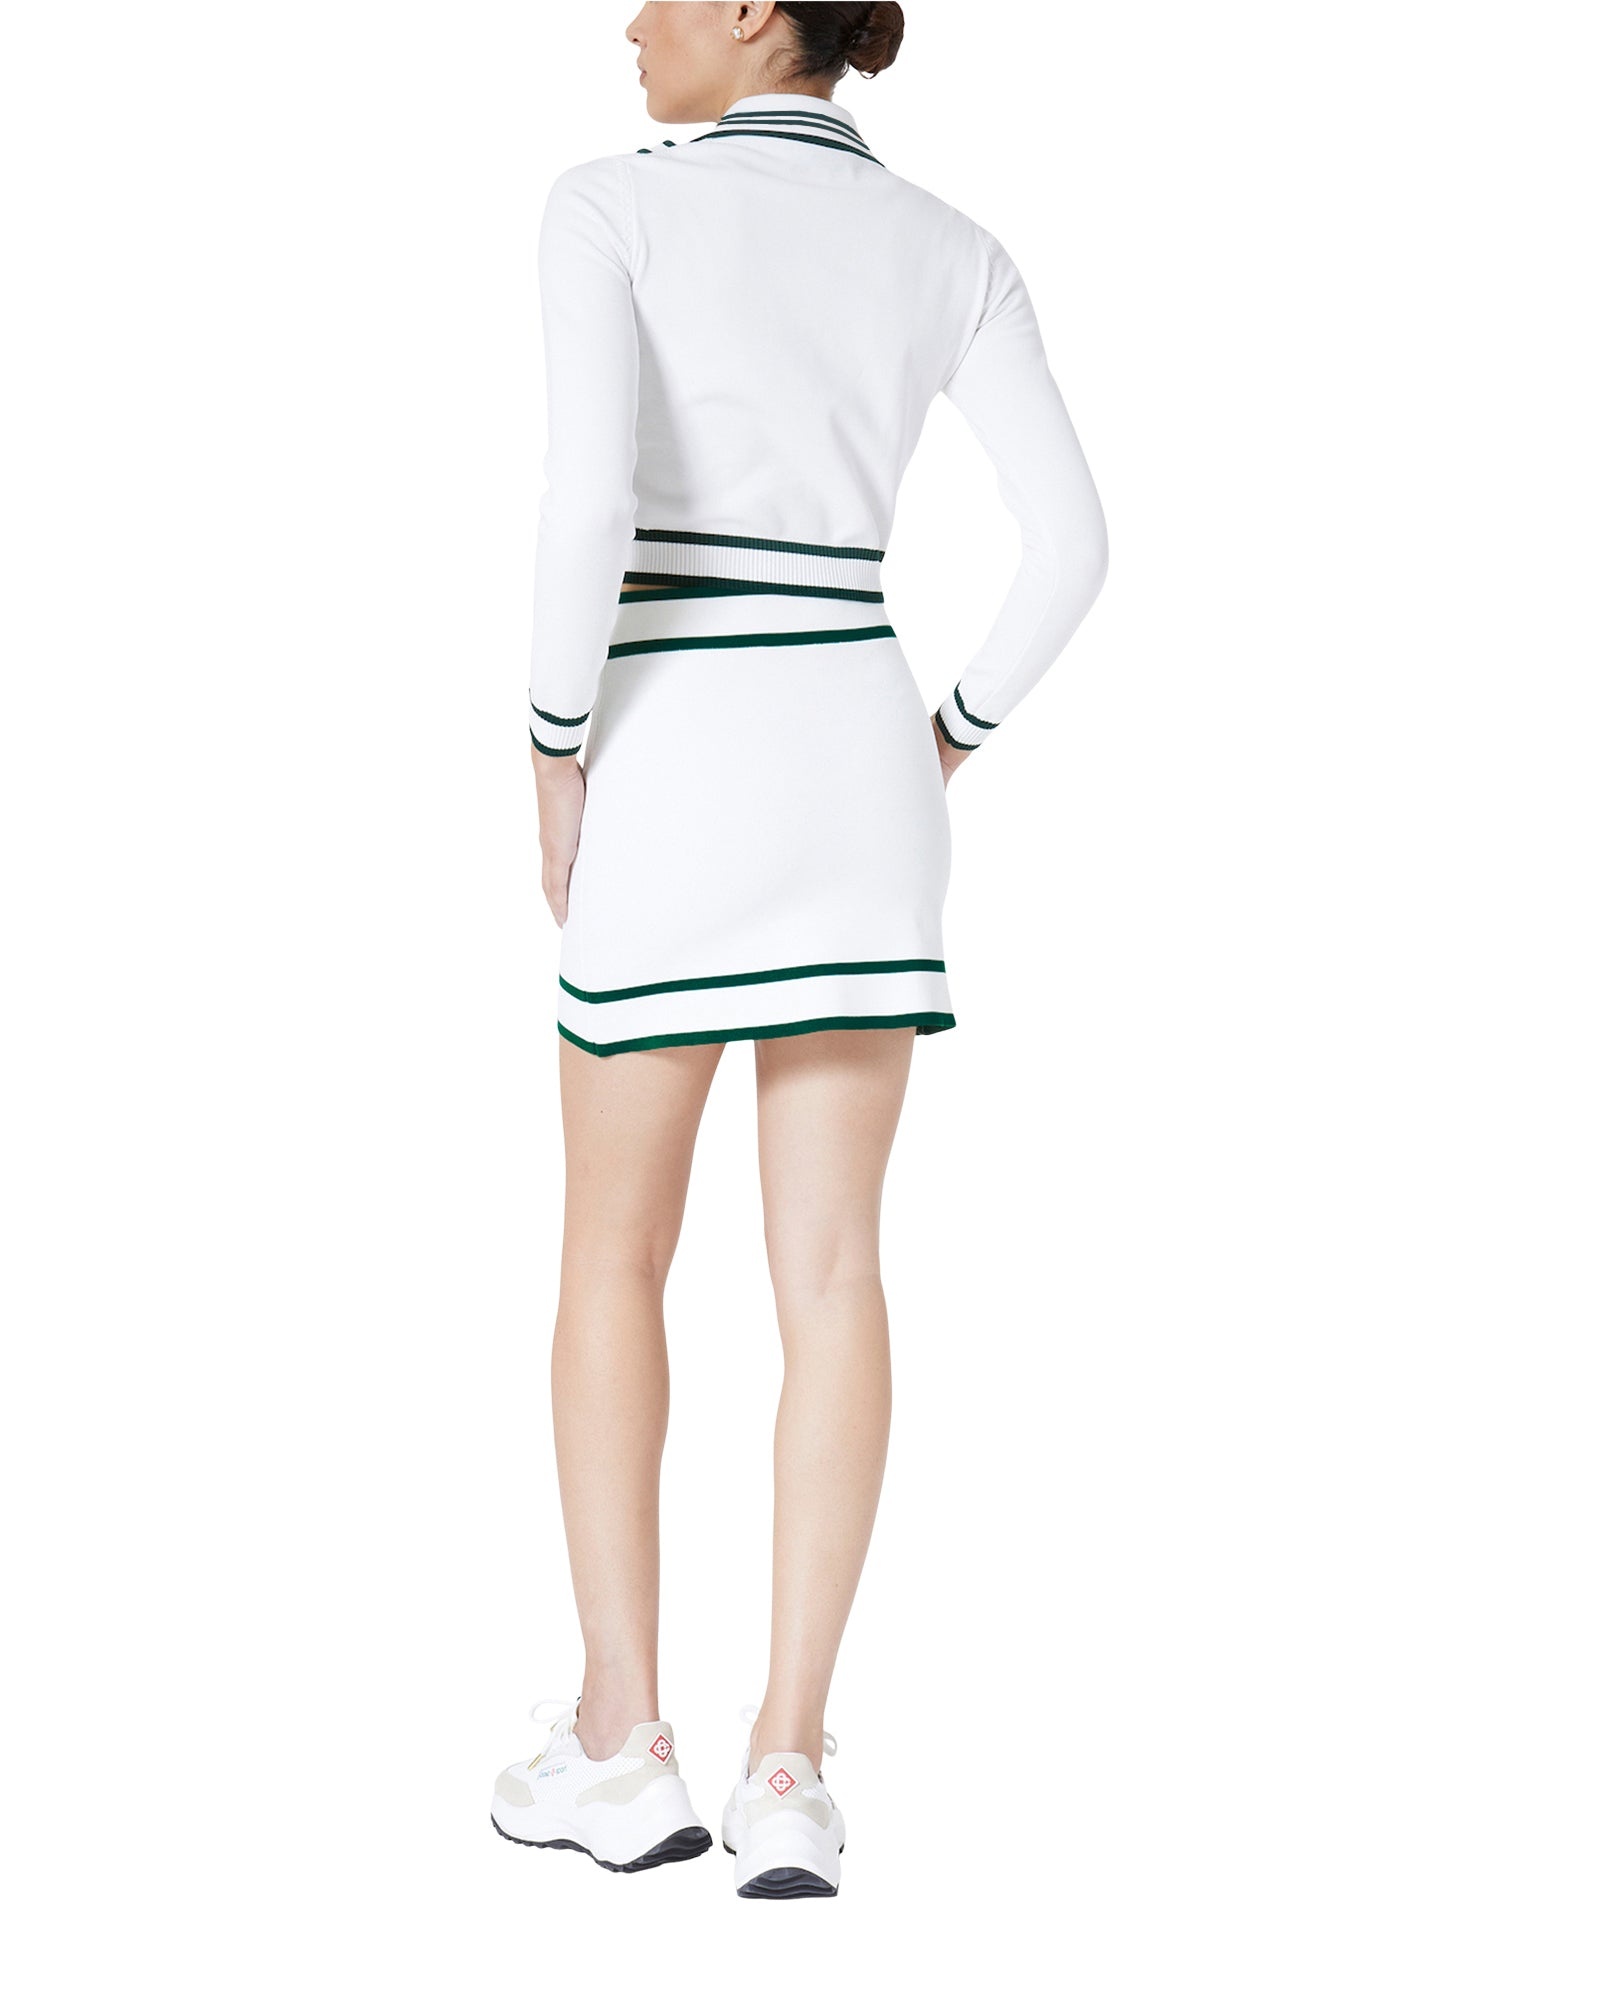 Retro Tennis Skirt - 3